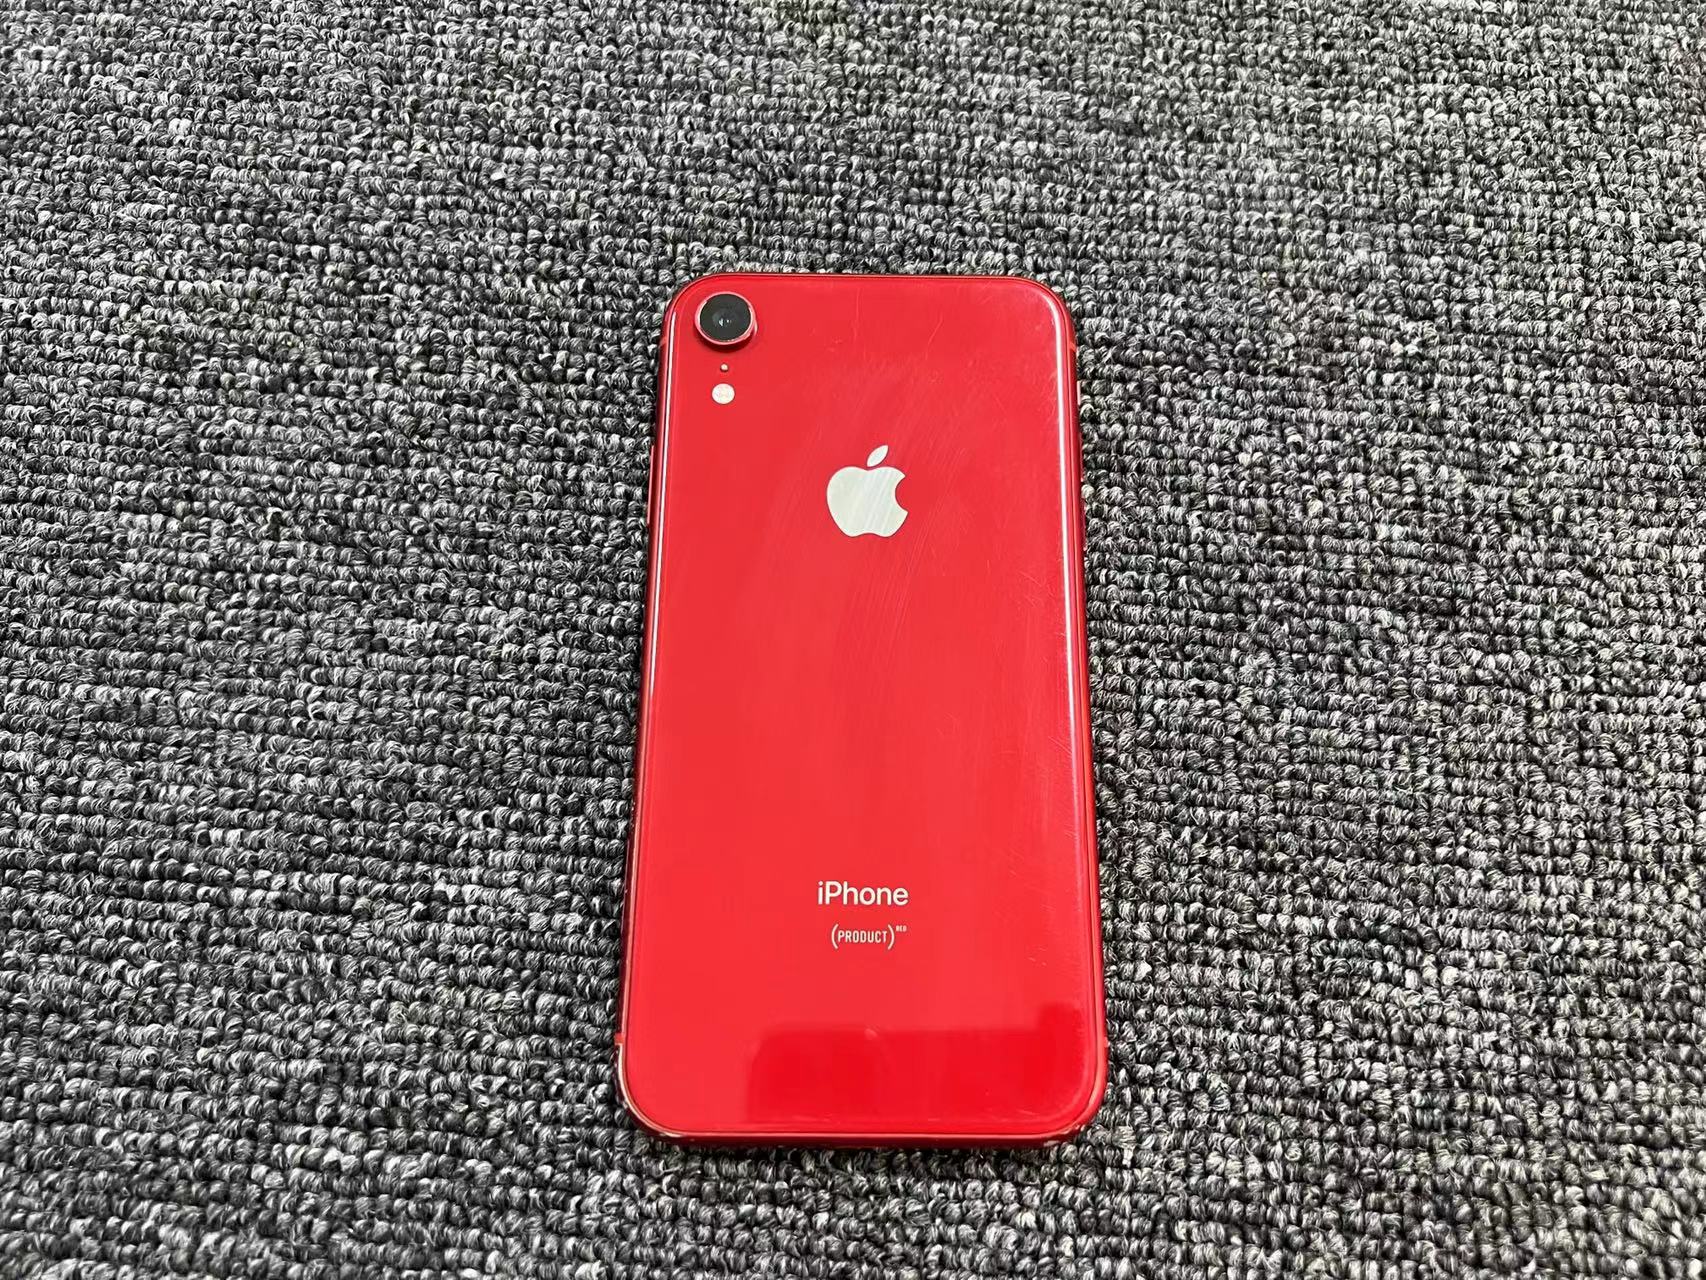 iPhone xr 美版 64G 红色 81%电 屏靓框花